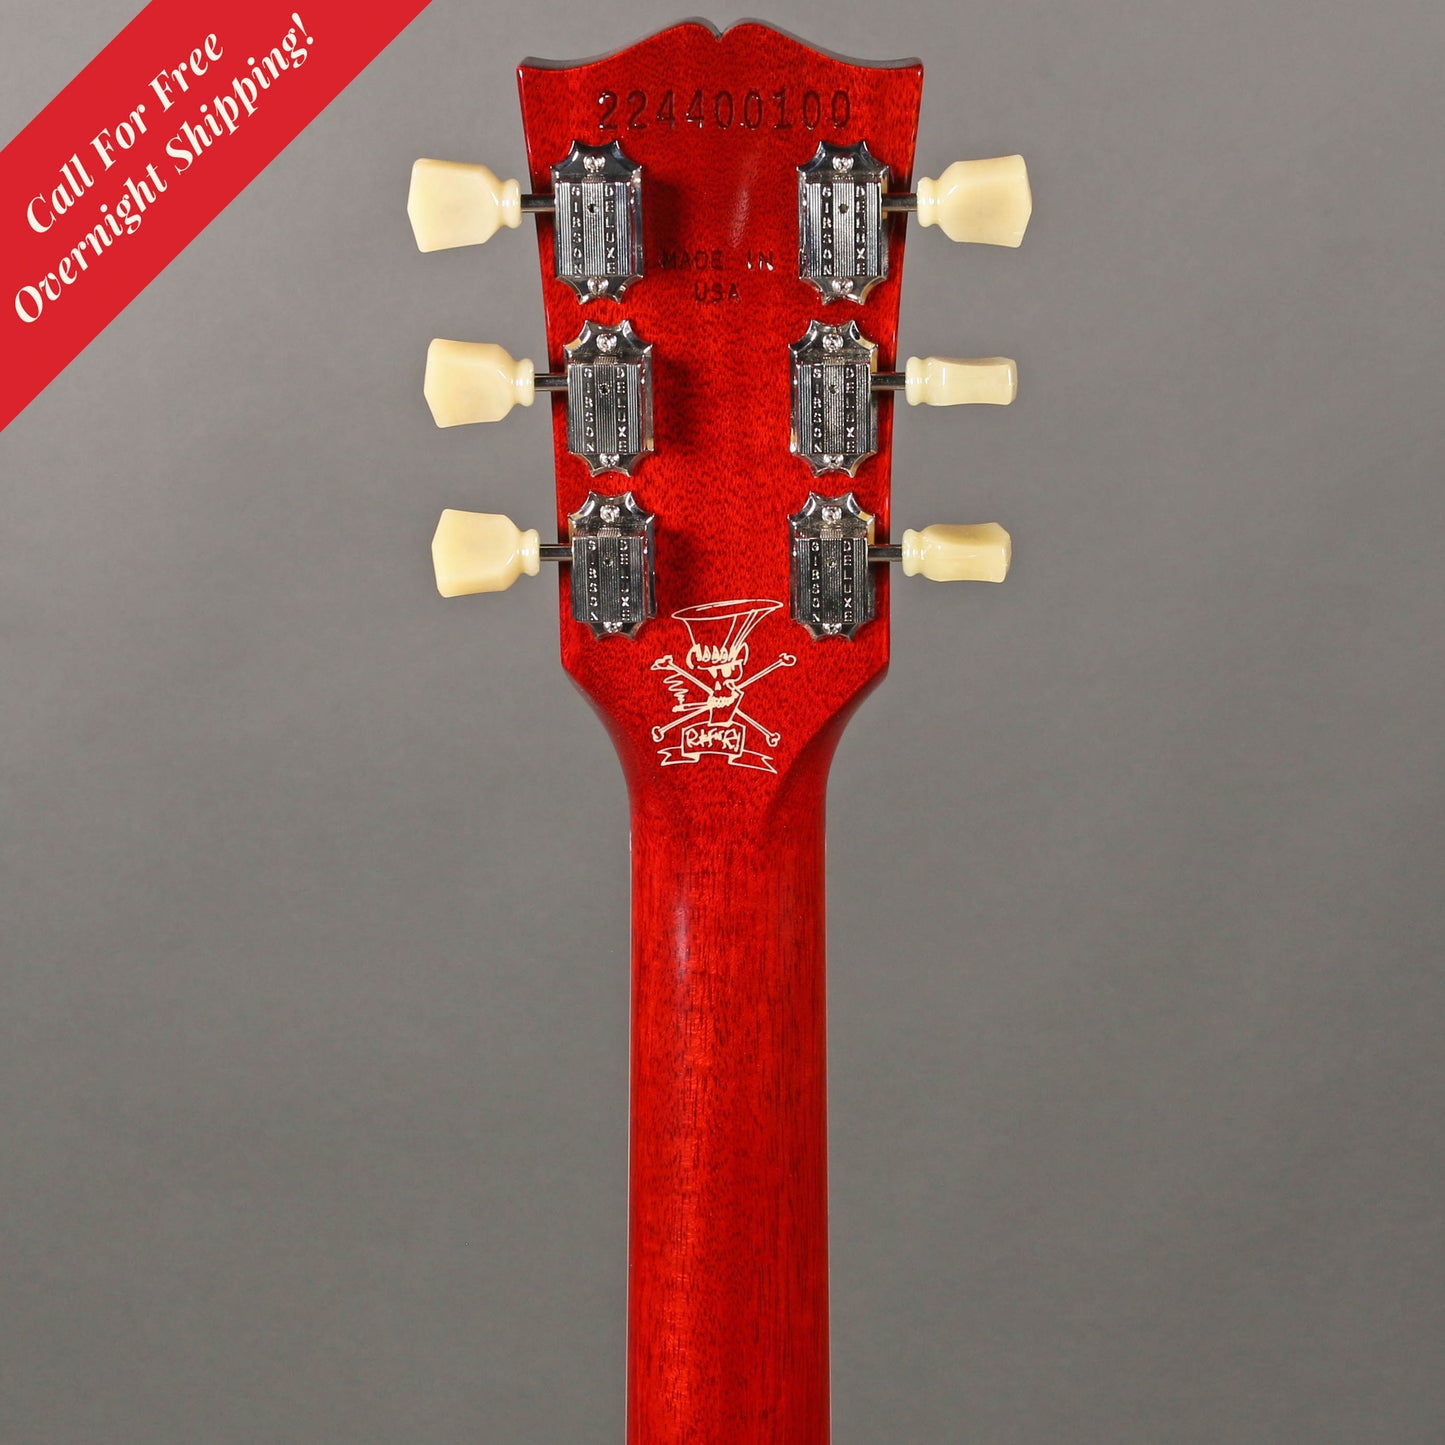 2020 Gibson Slash Les Paul Standard